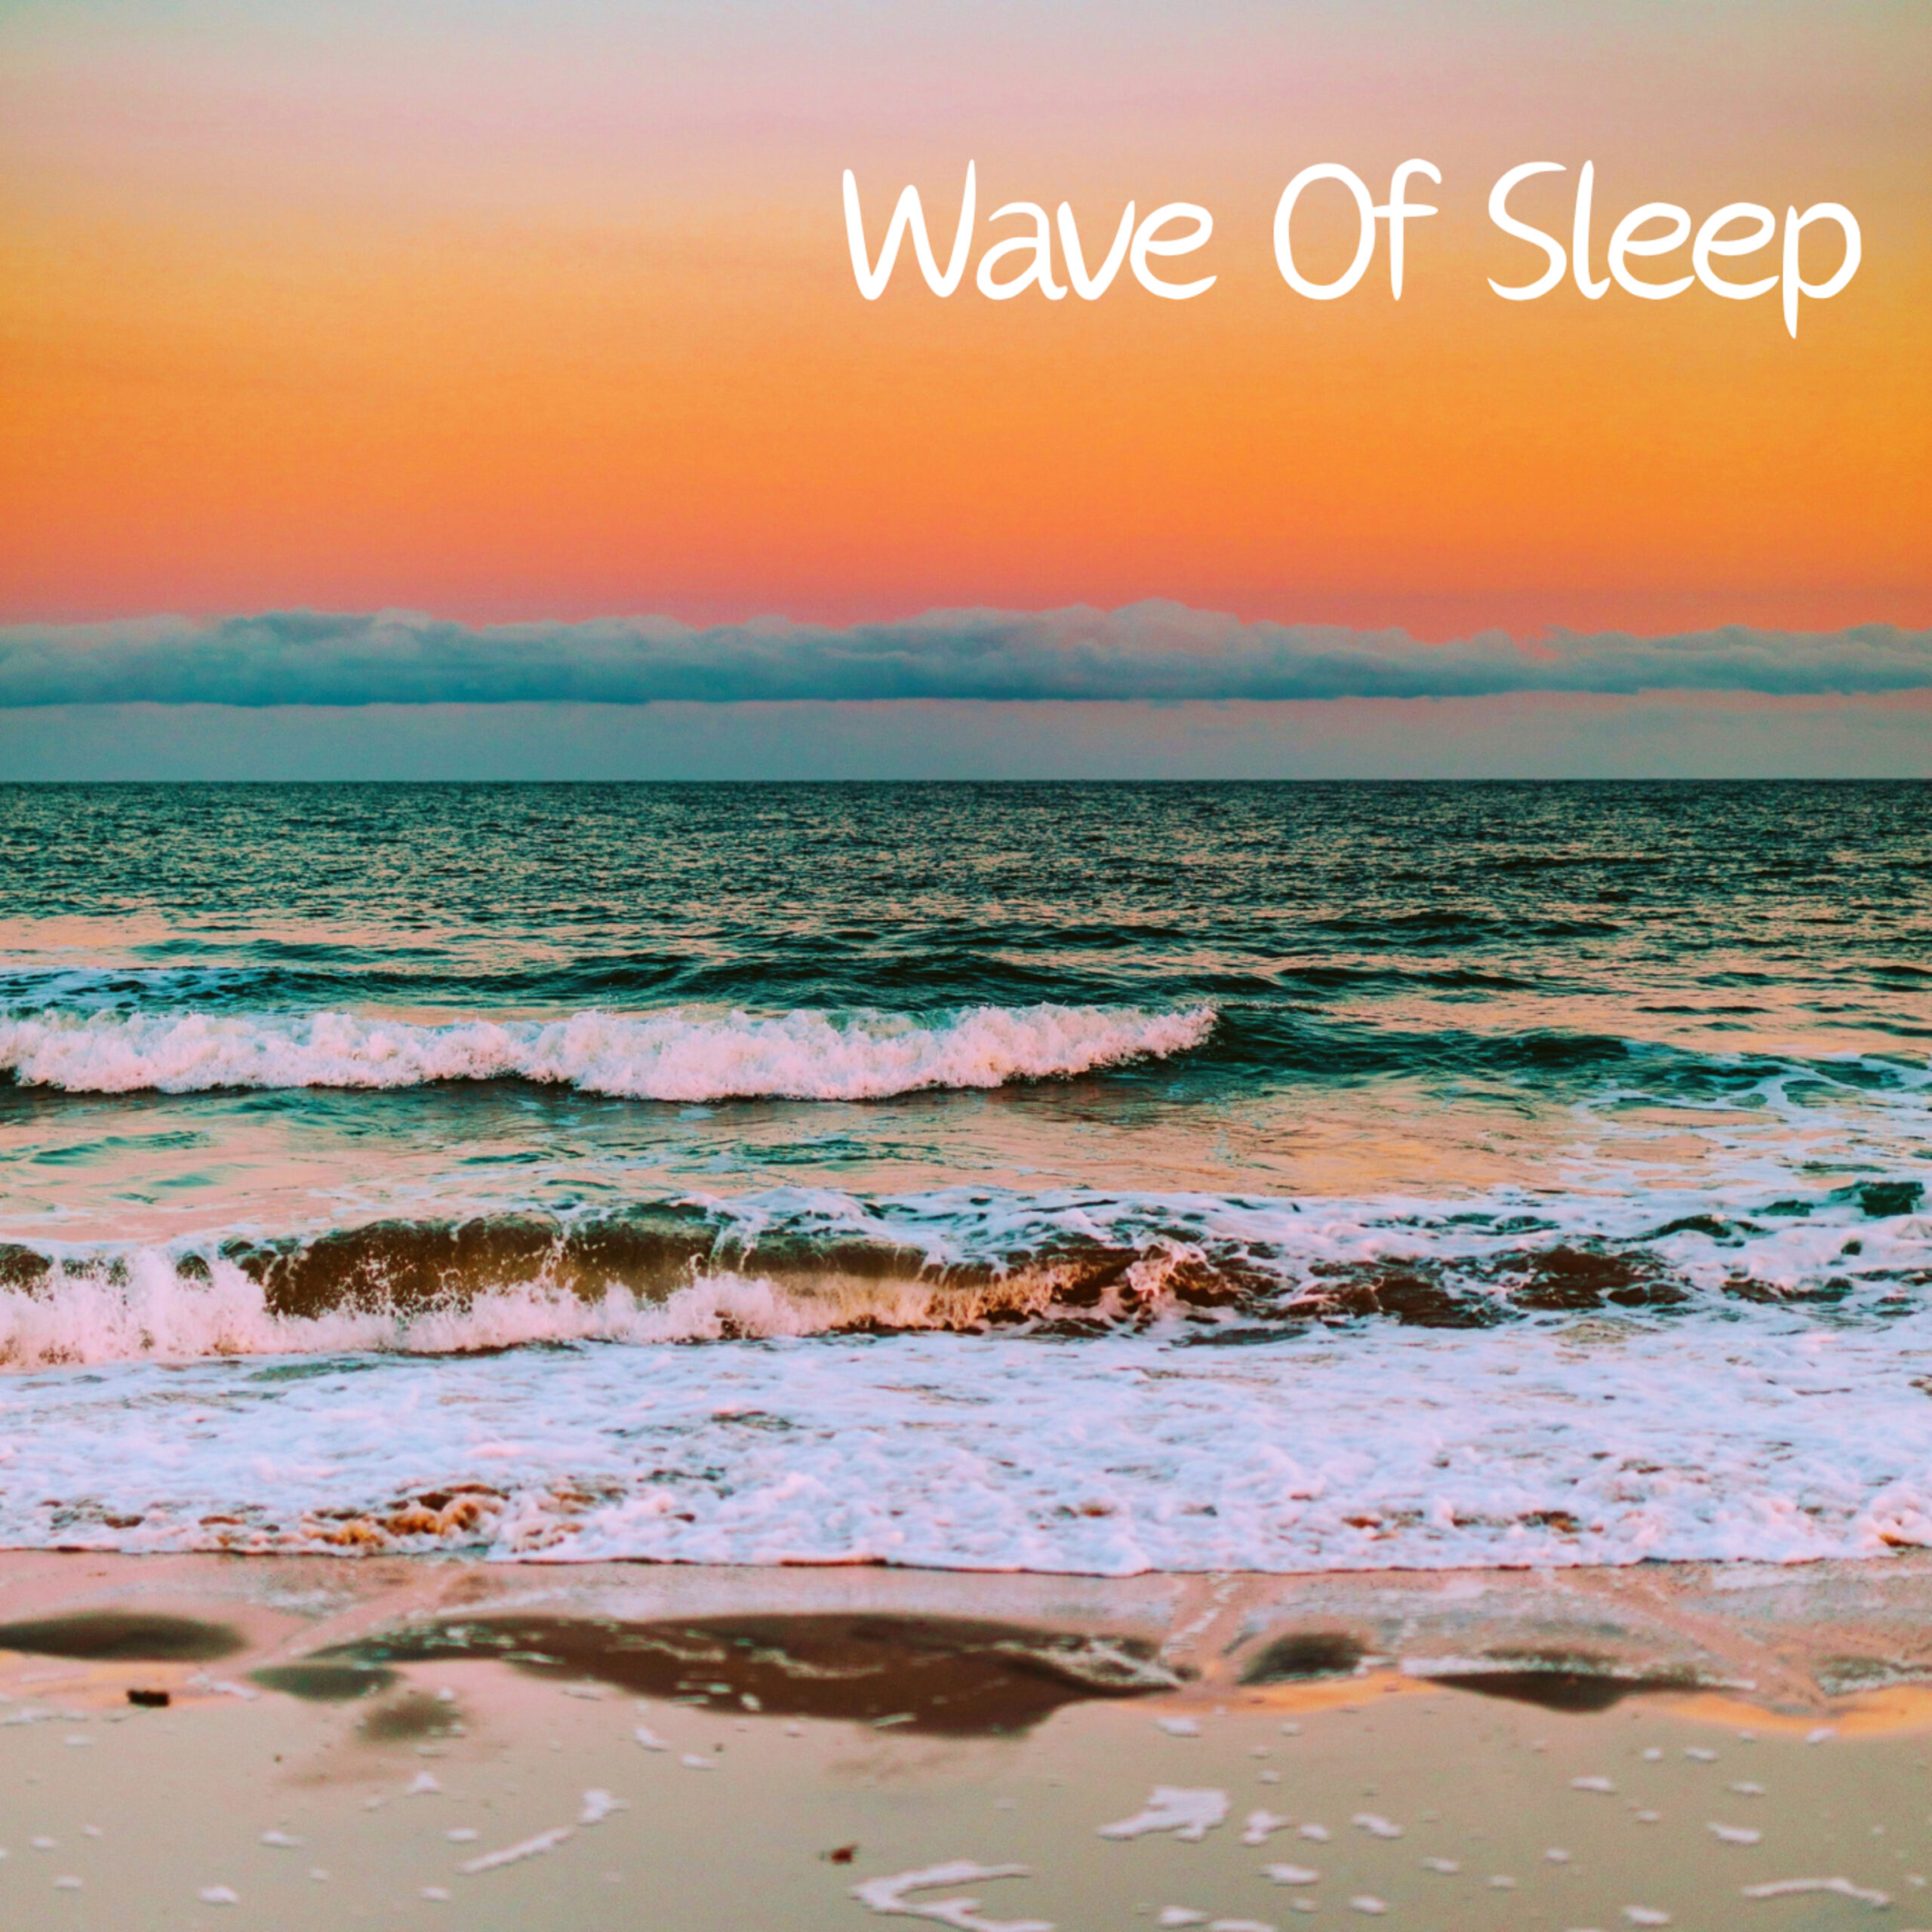 Wave Of Sleep -波の音の癒し- 睡眠用 作業用 移動用 瞑想用